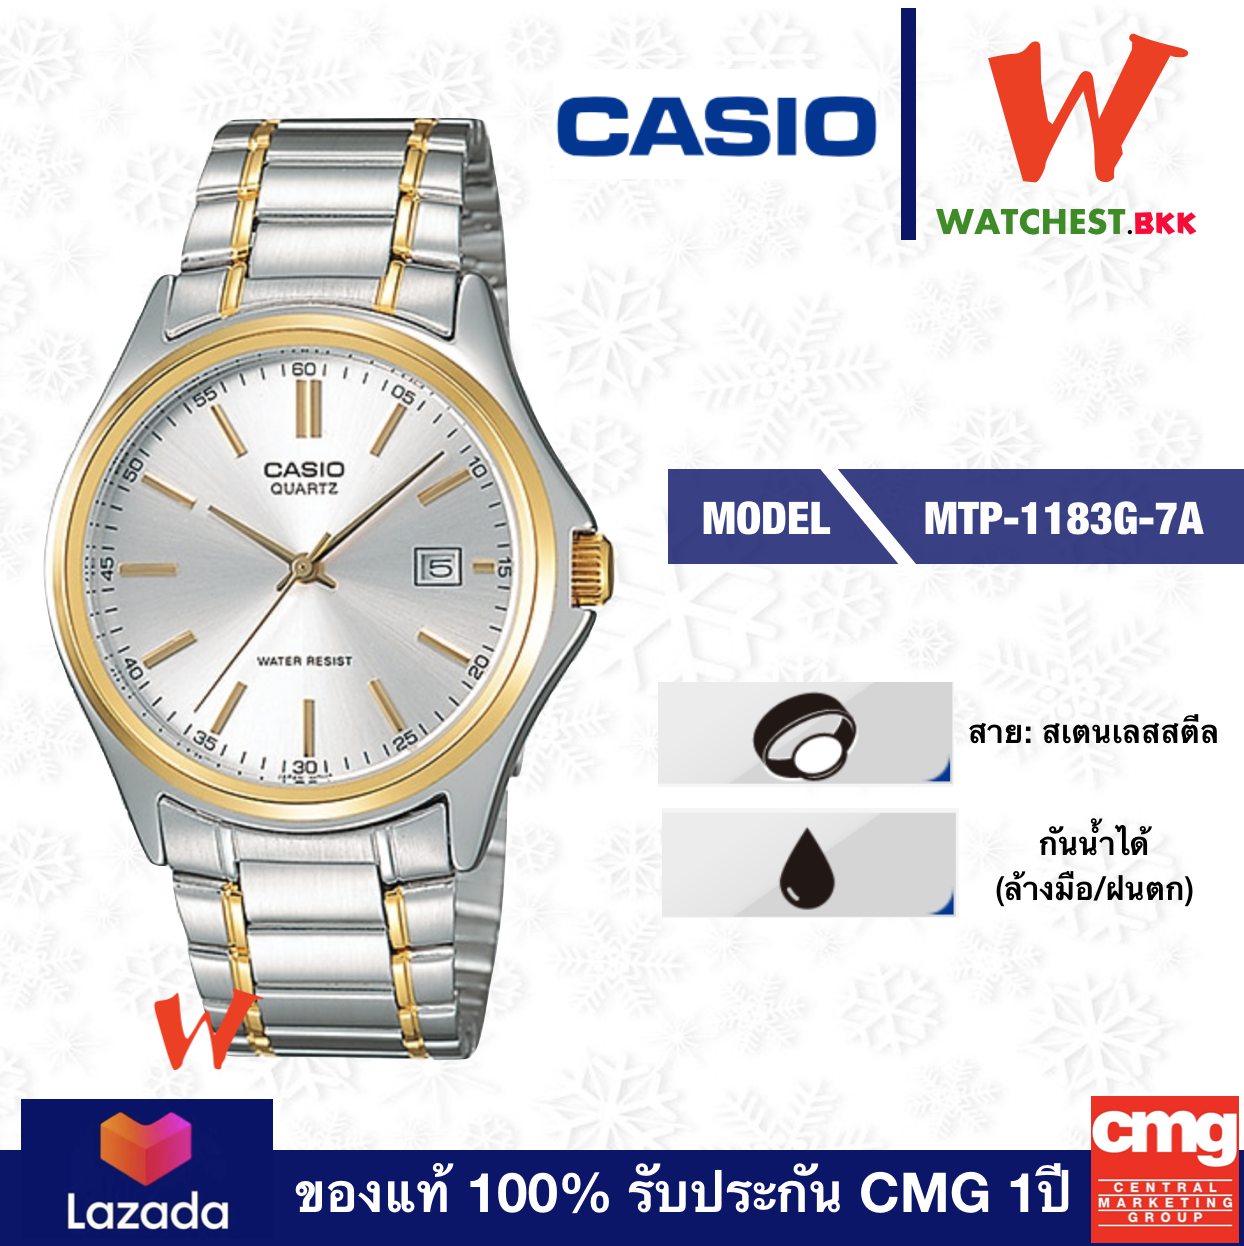 casio นาฬิกาข้อมือผู้ชาย สายสเตนเลส รุ่น MTP-1183G-7A คาสิโอ้ สายเหล็ก ตัวล็อกบานพับ (watchestbkk คาสิโอ แท้ ของแท้100% ประกัน CMG)